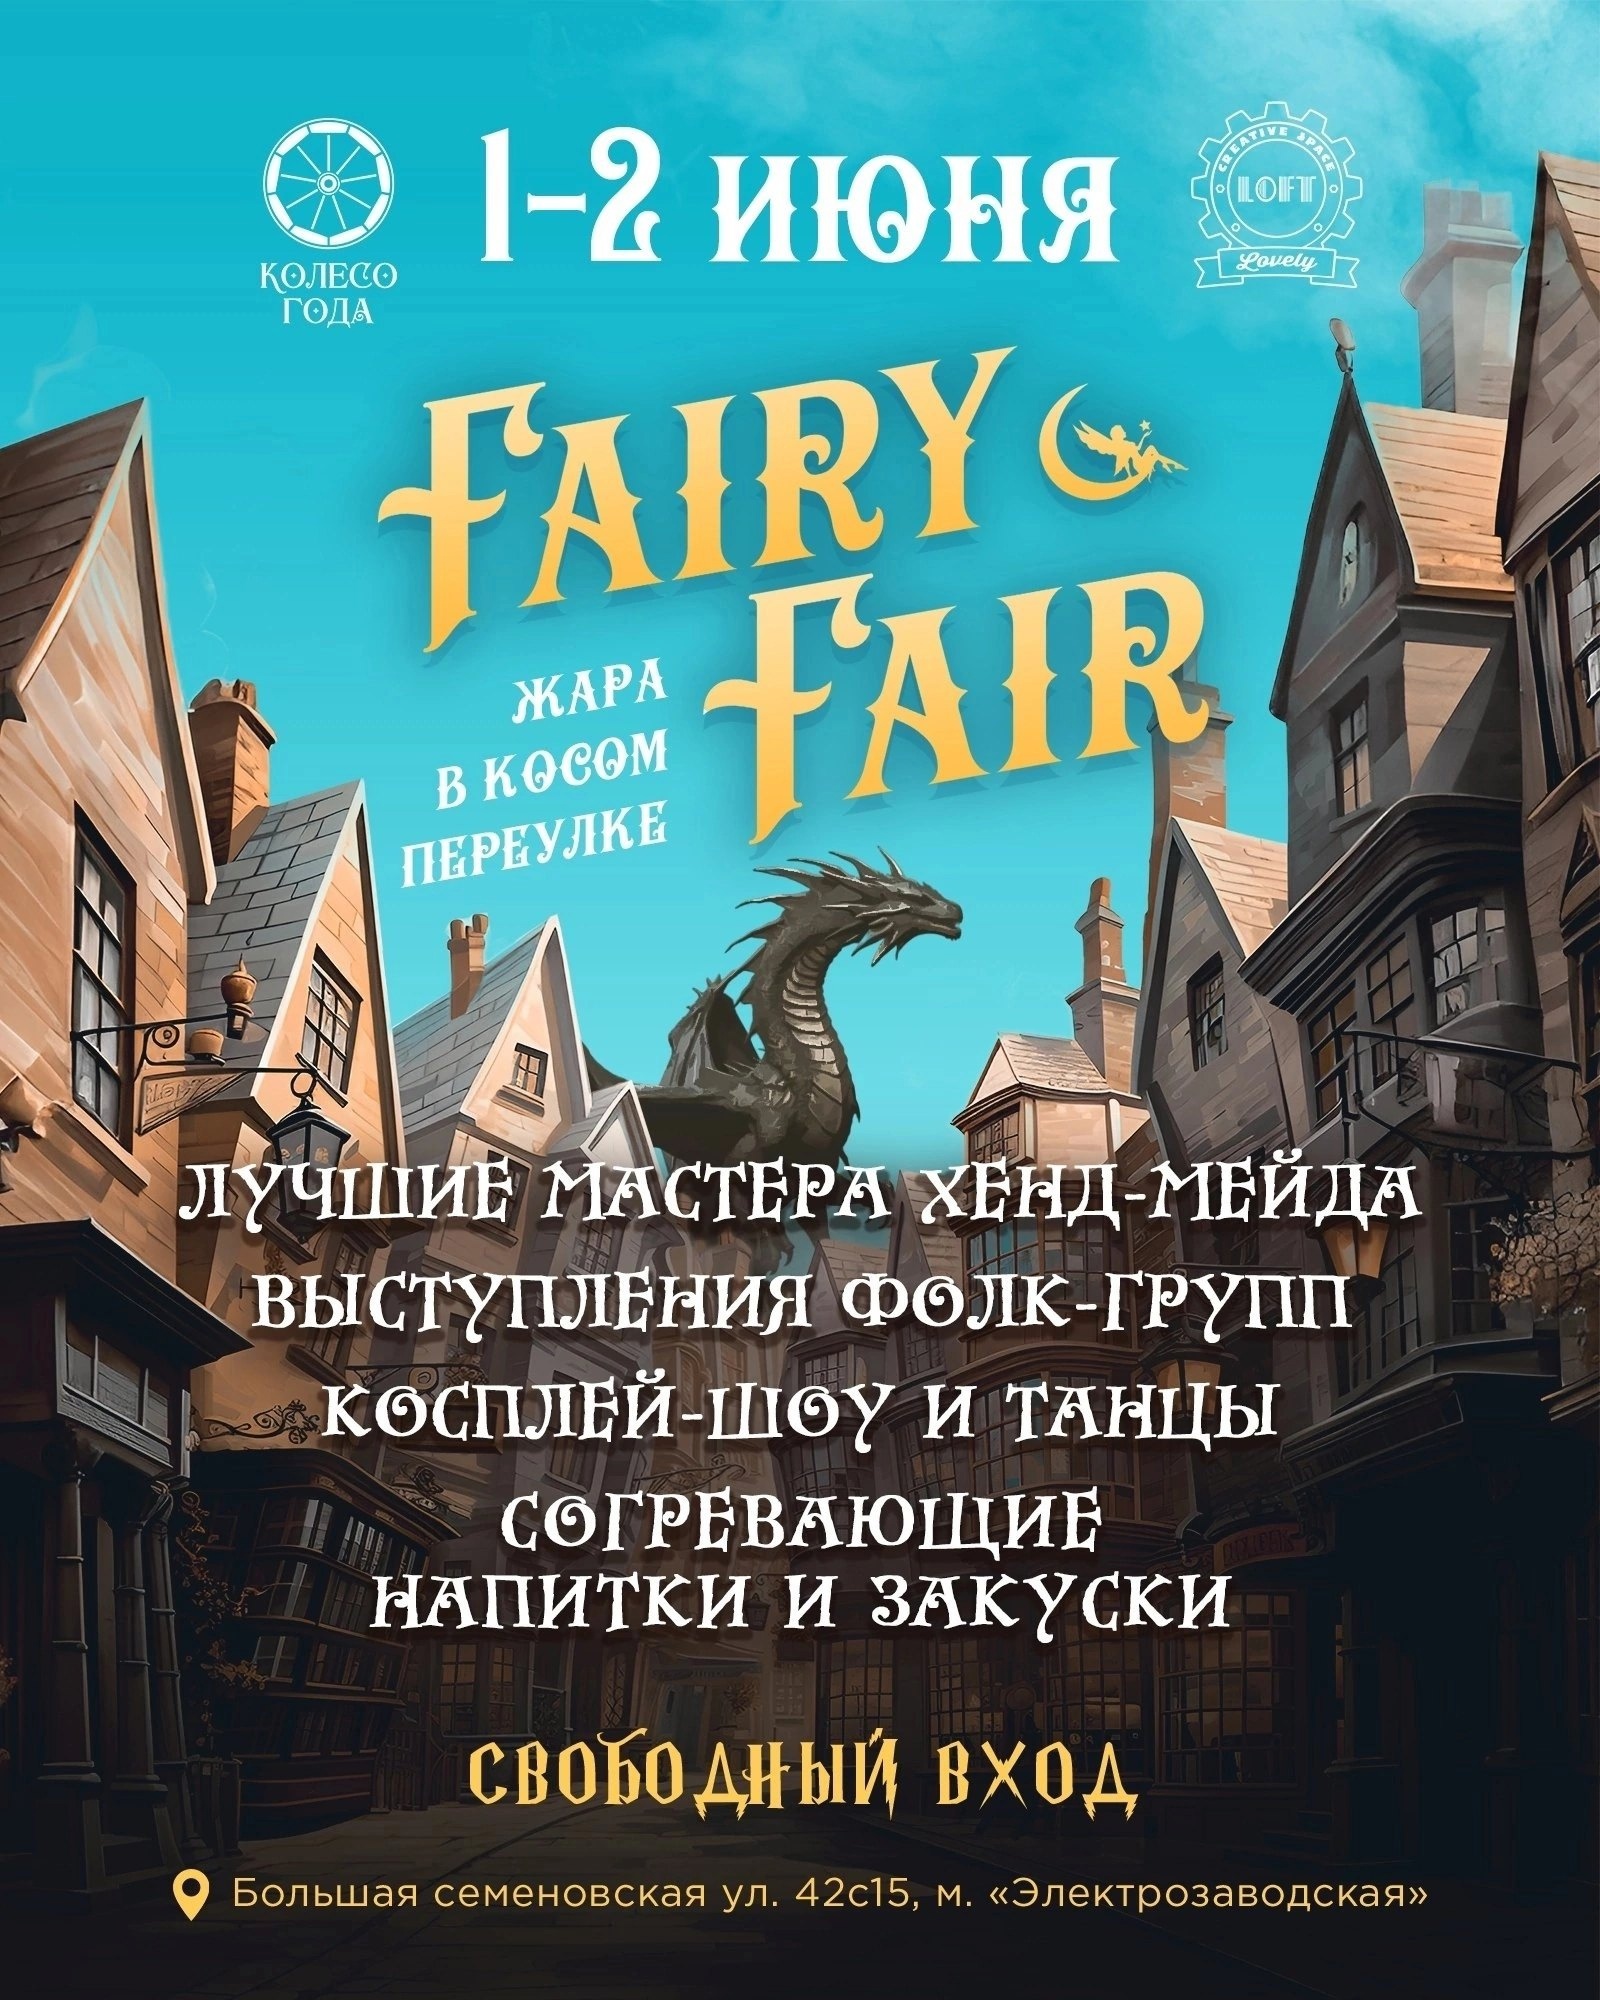 Ярмарка Fairy Fair в Москве 1-2 июня